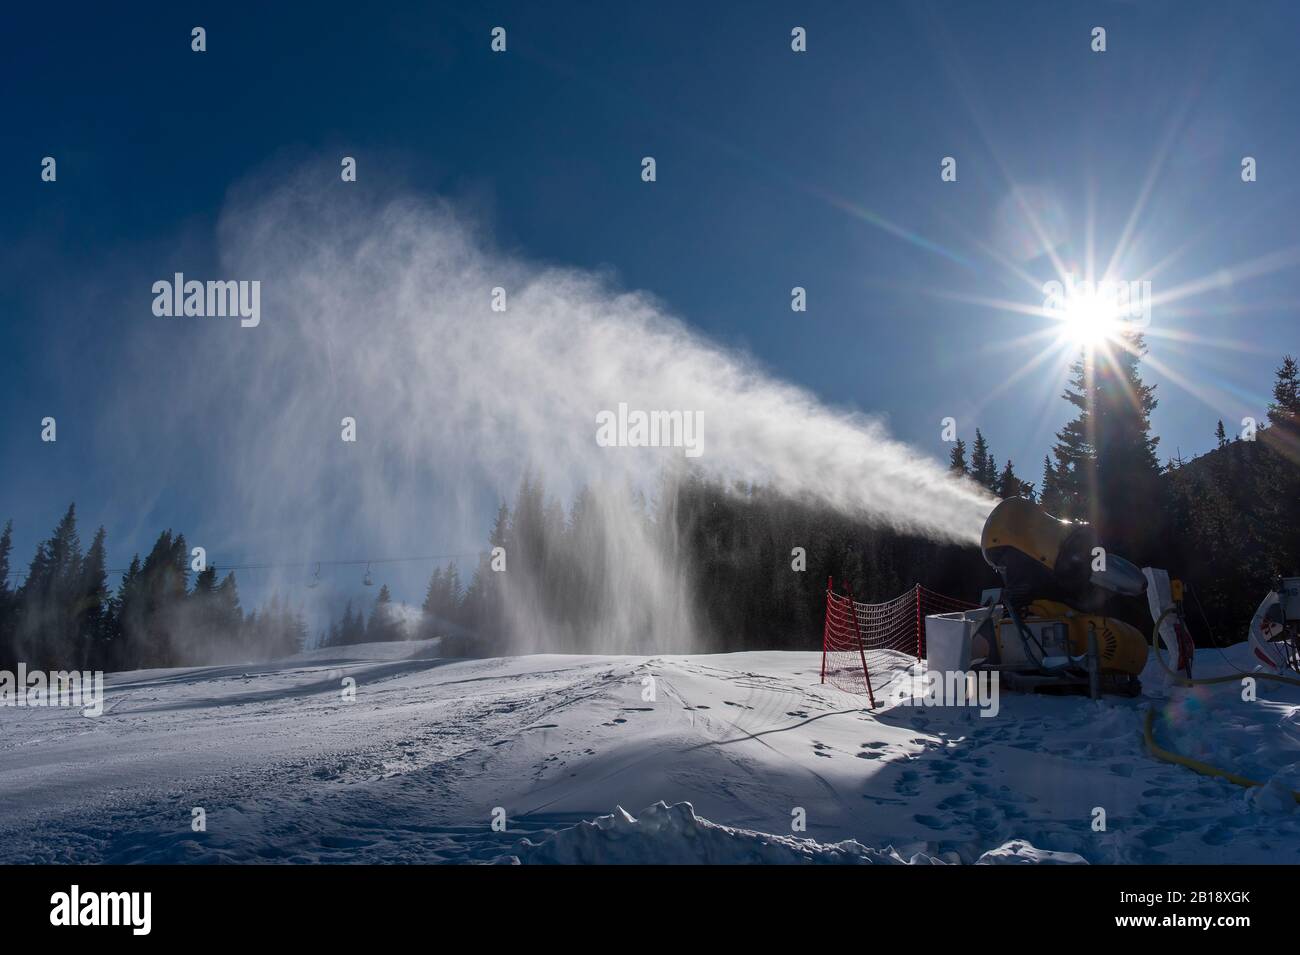 Ski slope with artificial snow machine Stock Photo - Alamy